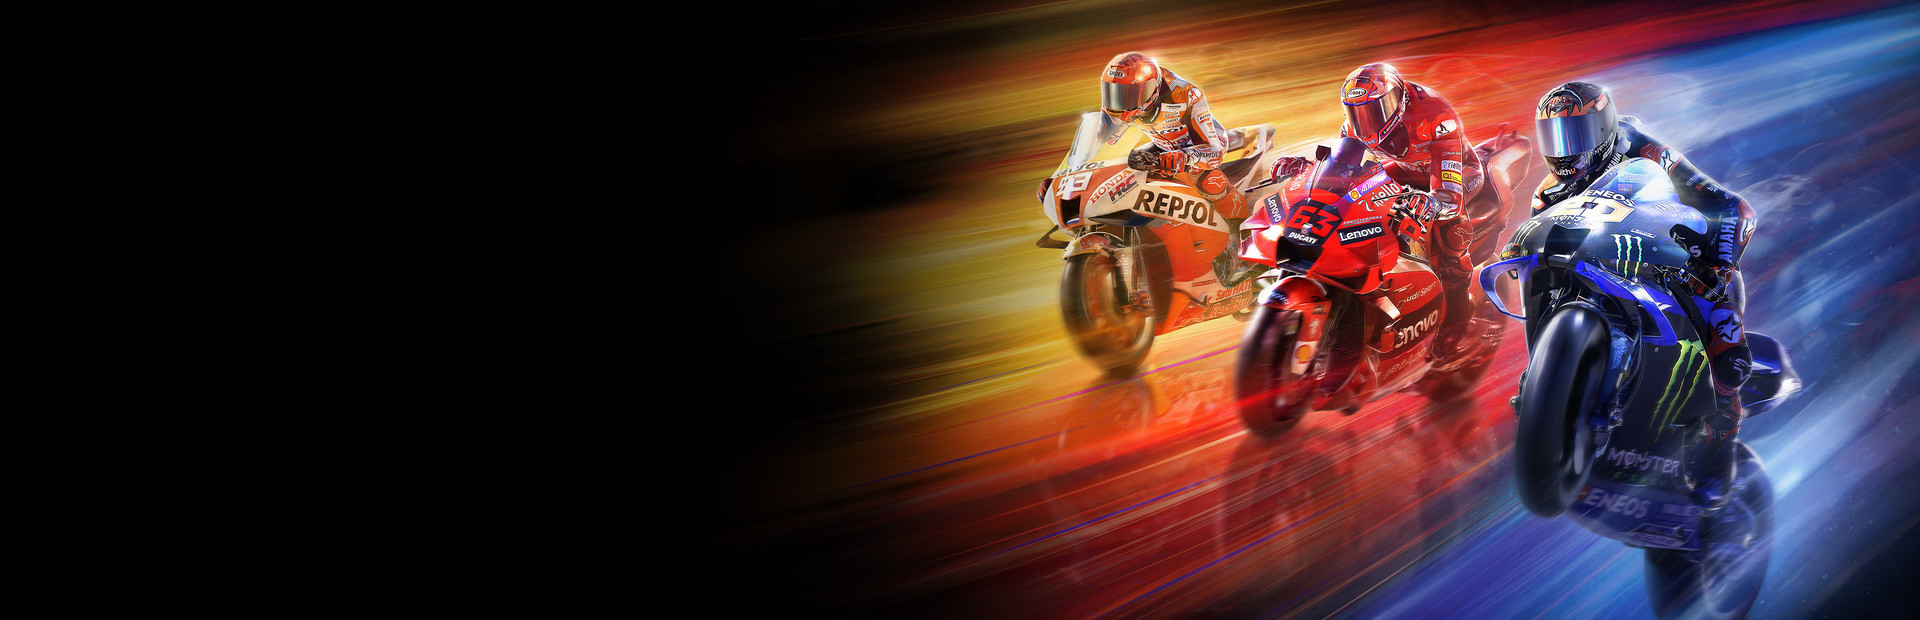 MotoGP™22 cover image